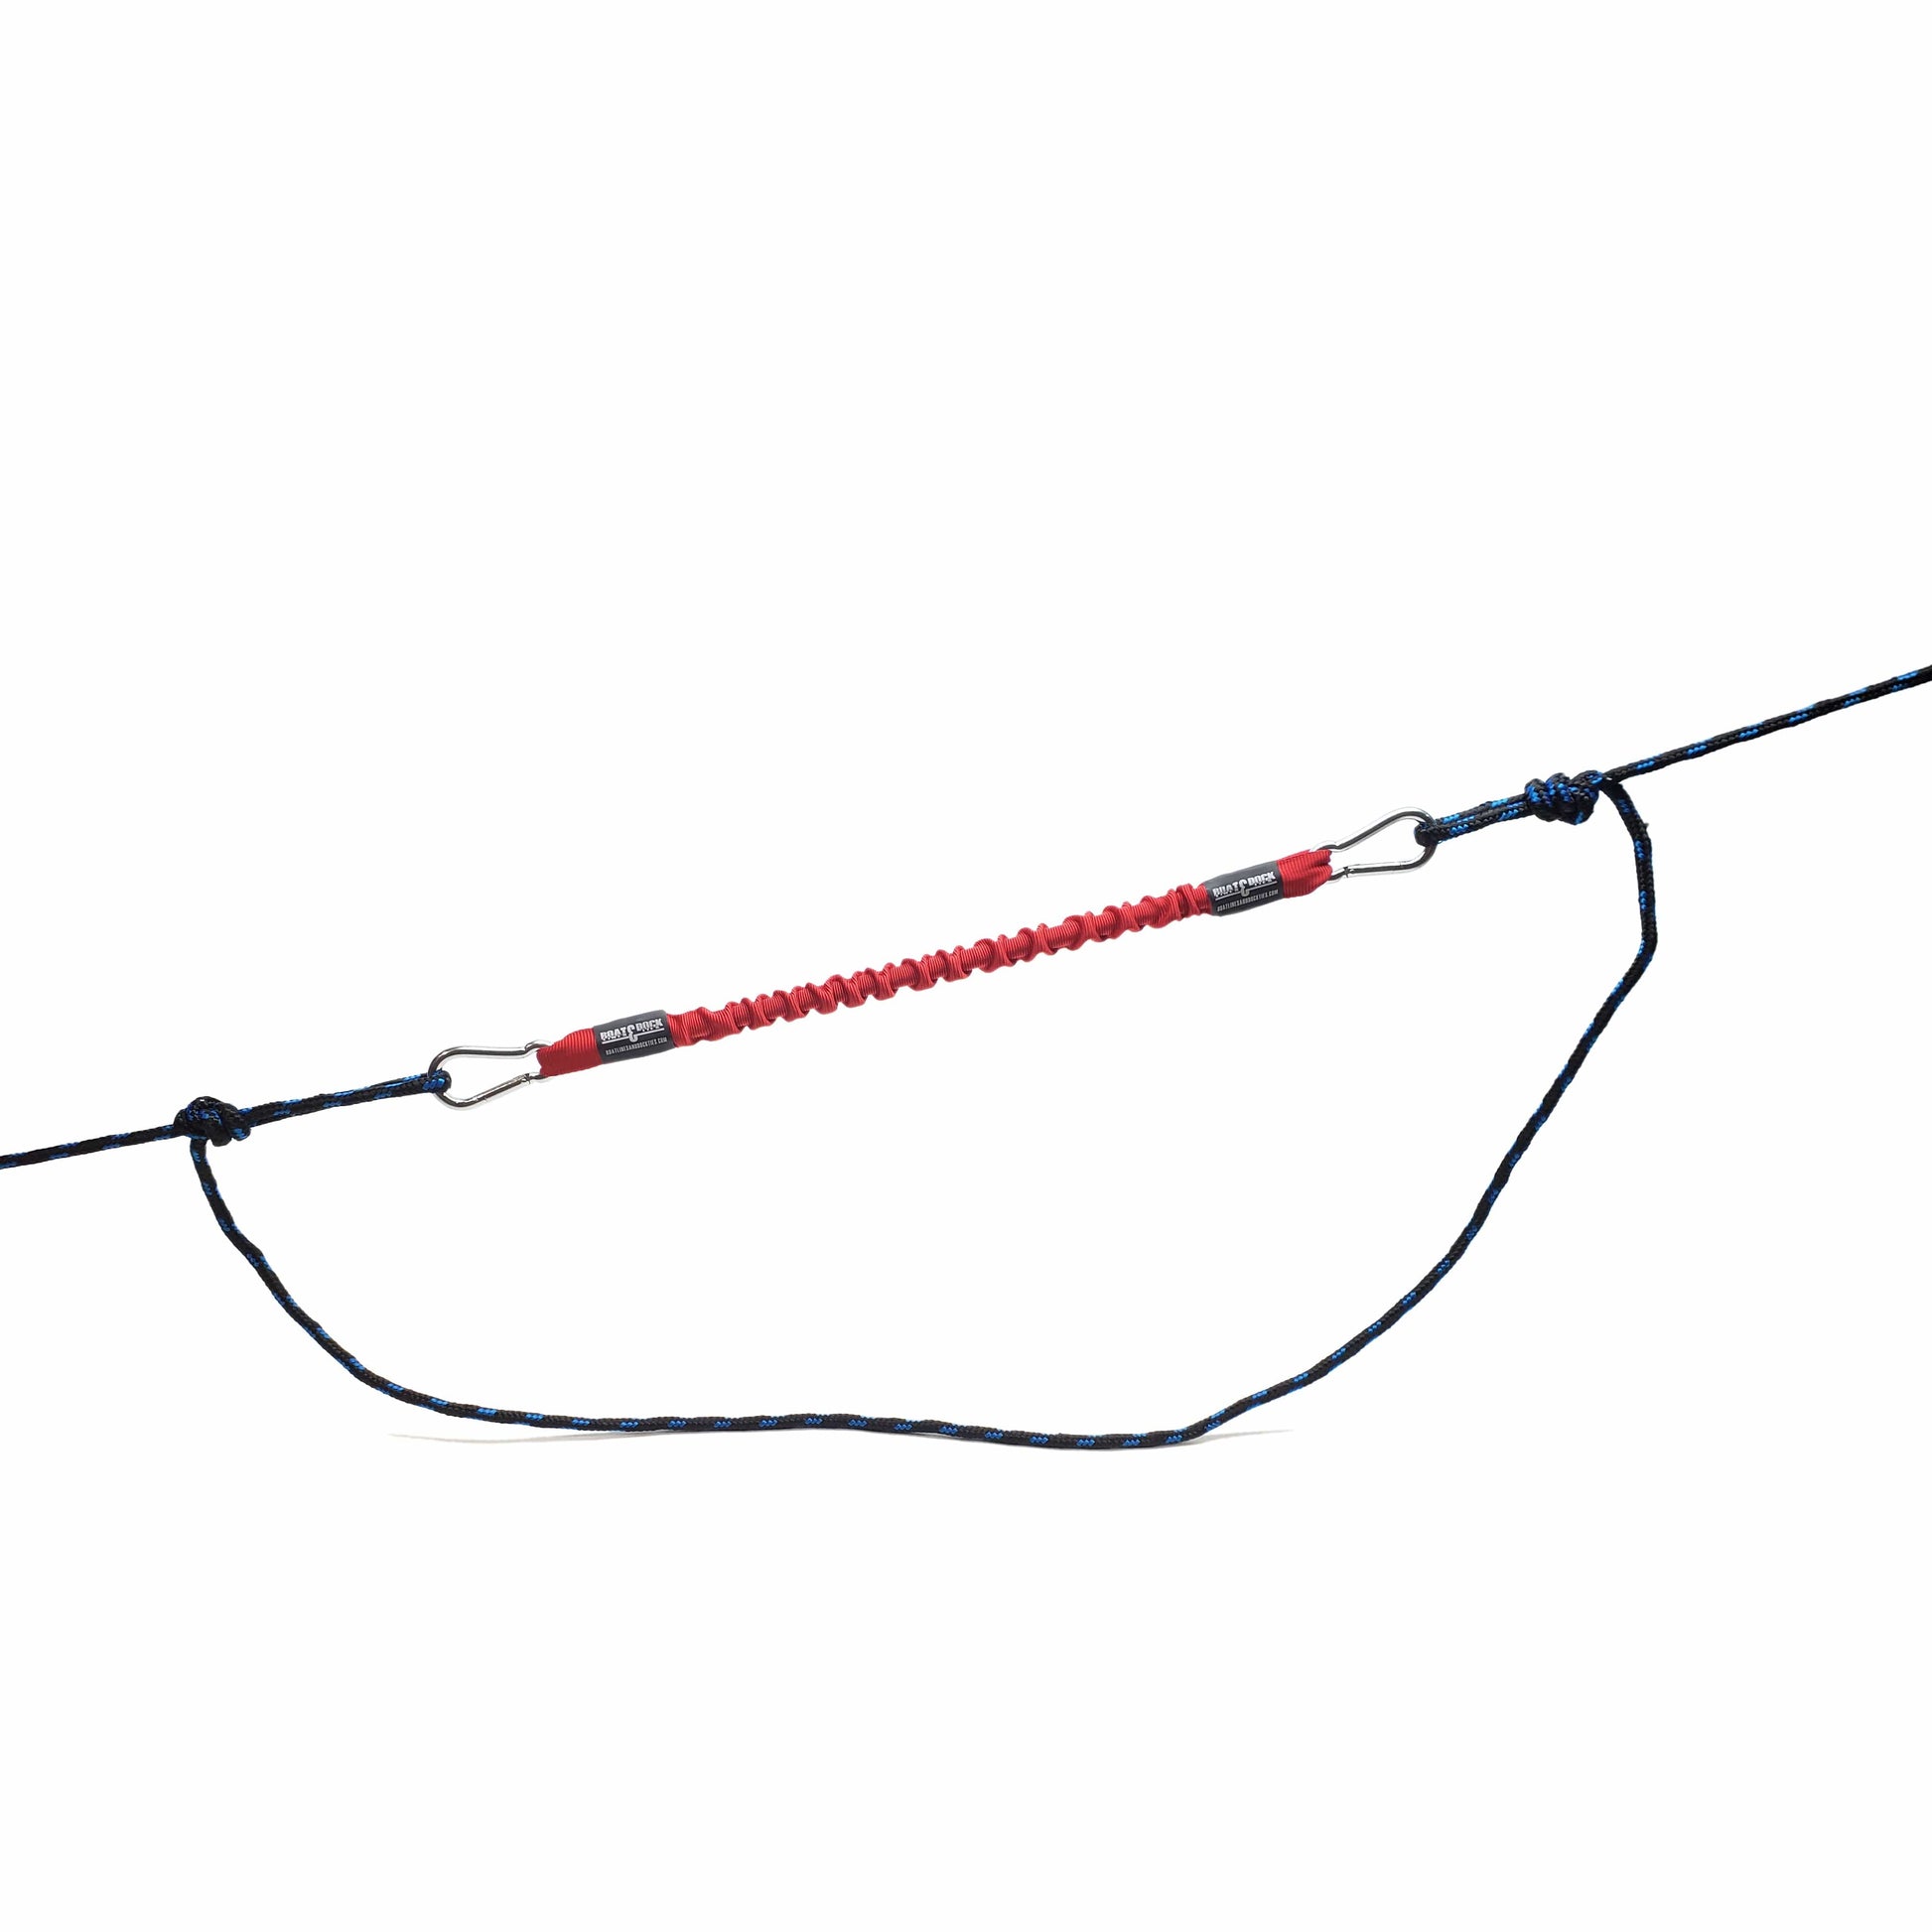 Bungee Snubber Dock Tie Line - With Stainless Steel Hooks - 1 per pack –  Boat Lines & Dock Ties